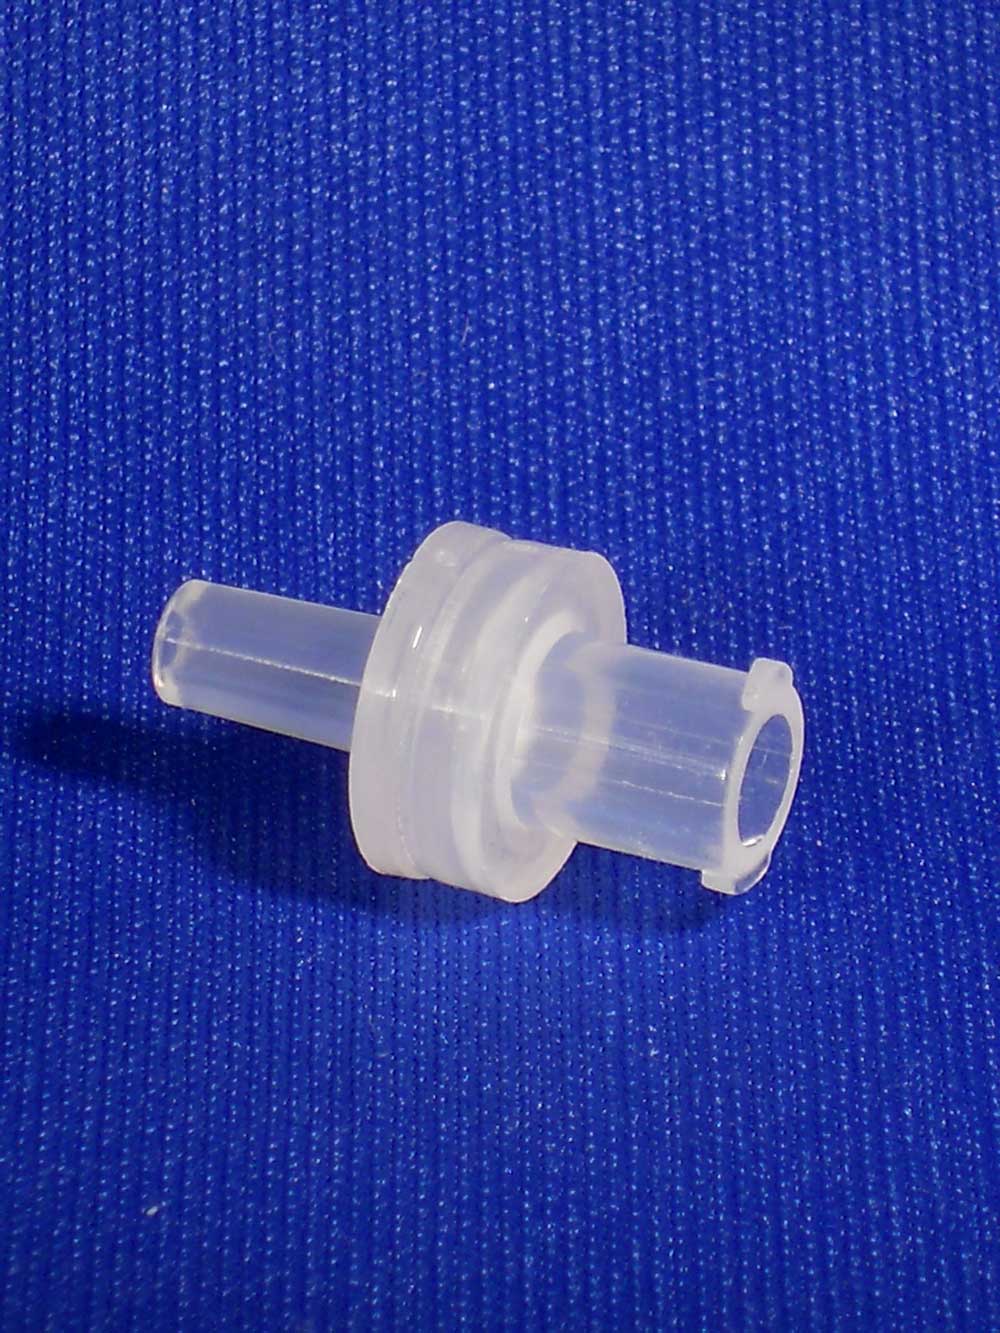 IW Tremont IWT-ES-10604 Nonsterile syringe filter, 4mm diameter, 0.45micron, PTFE HYDROPHOBIC membrane, 200pk